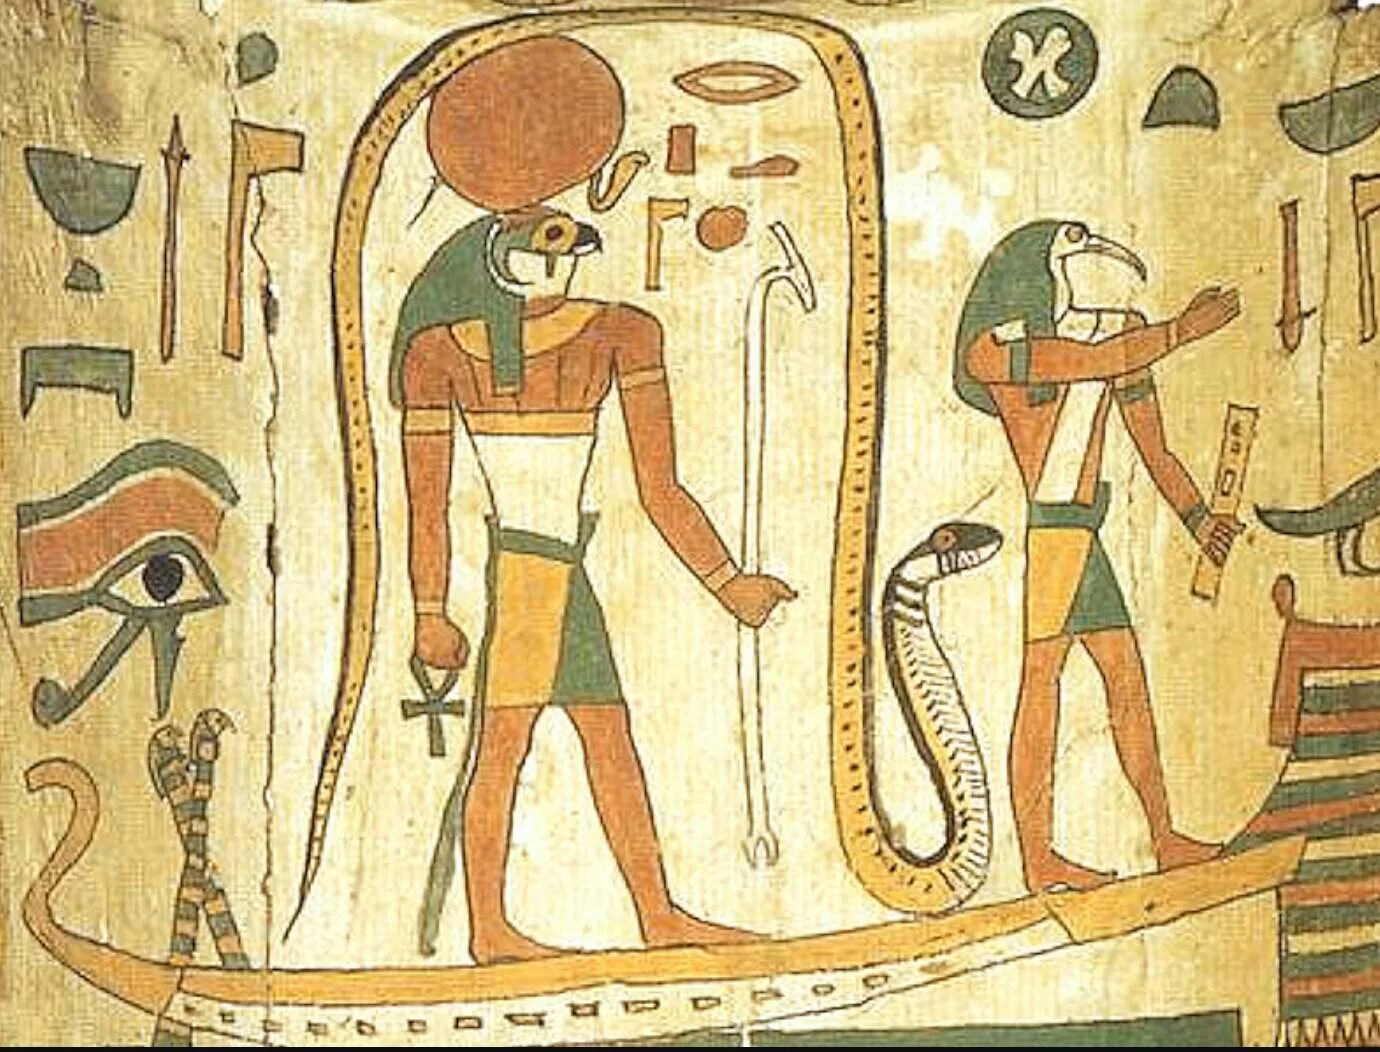 Amon gods. Бог Амон ра в древнем Египте. Апоп Бог Египта. Амон-ра Бог солнца в древнем Египте. Египетский Бог Амон рва.